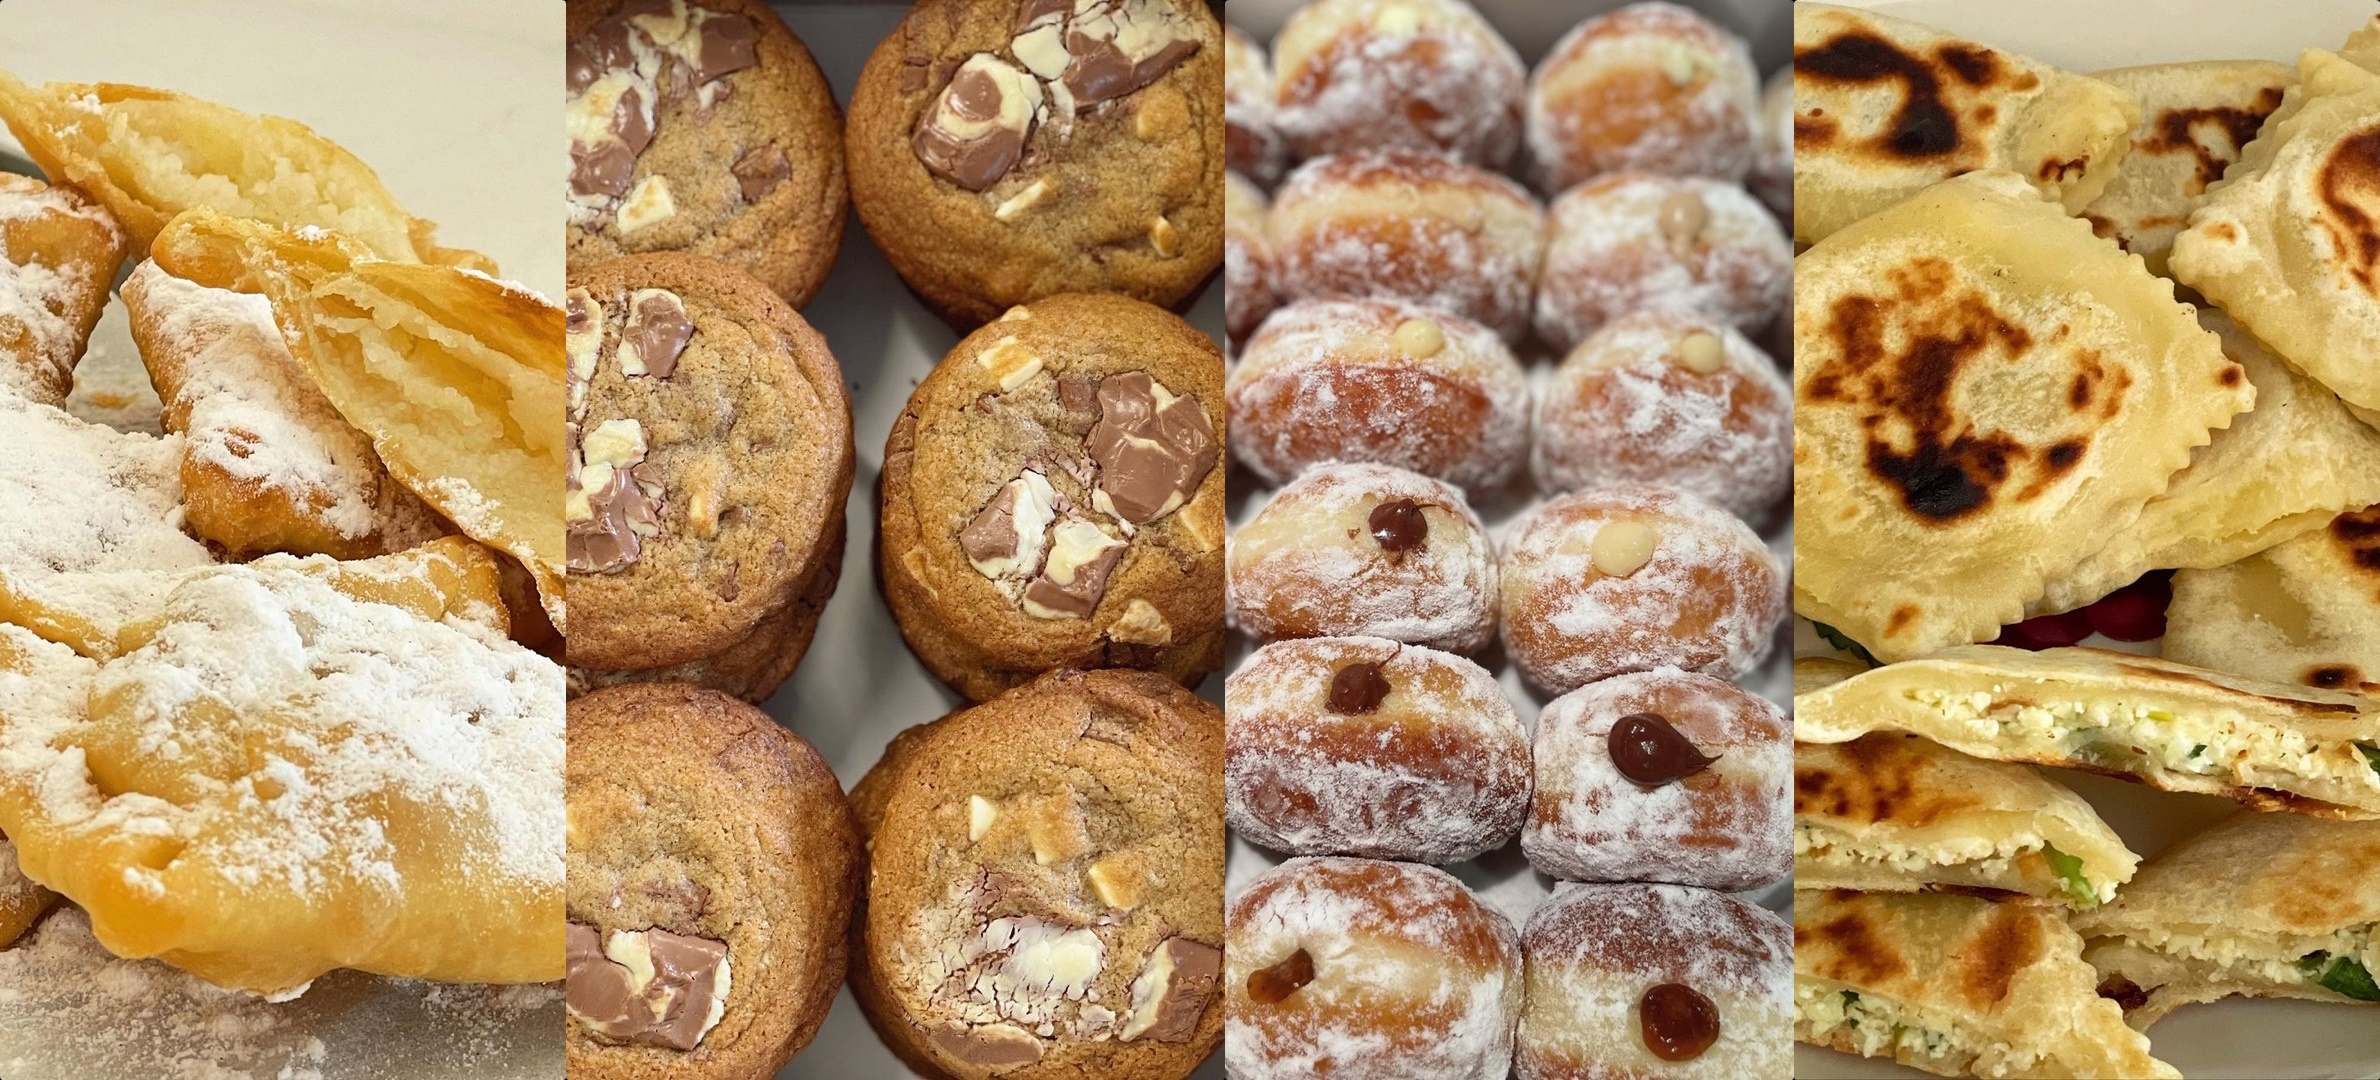 Biscotti Bakehouse: Νέα άφιξη στη Λάρνακα για αλμυρά και γλυκά